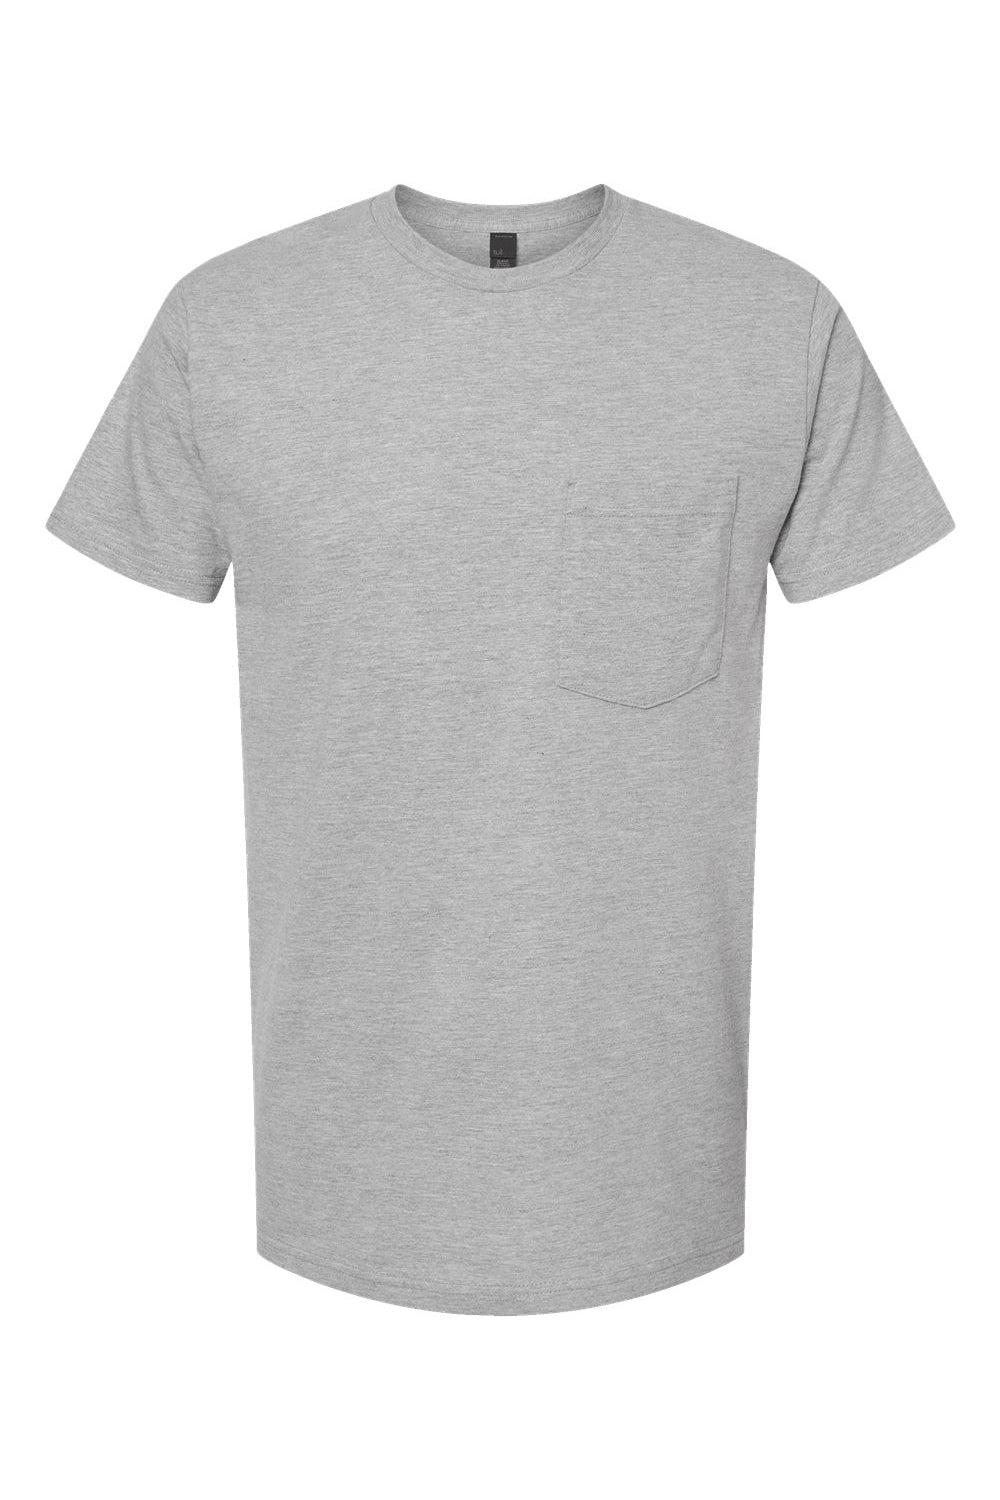 Tultex 293 Mens Jersey Short Sleeve Crewneck T-Shirt w/ Pocket Heather Grey Flat Front